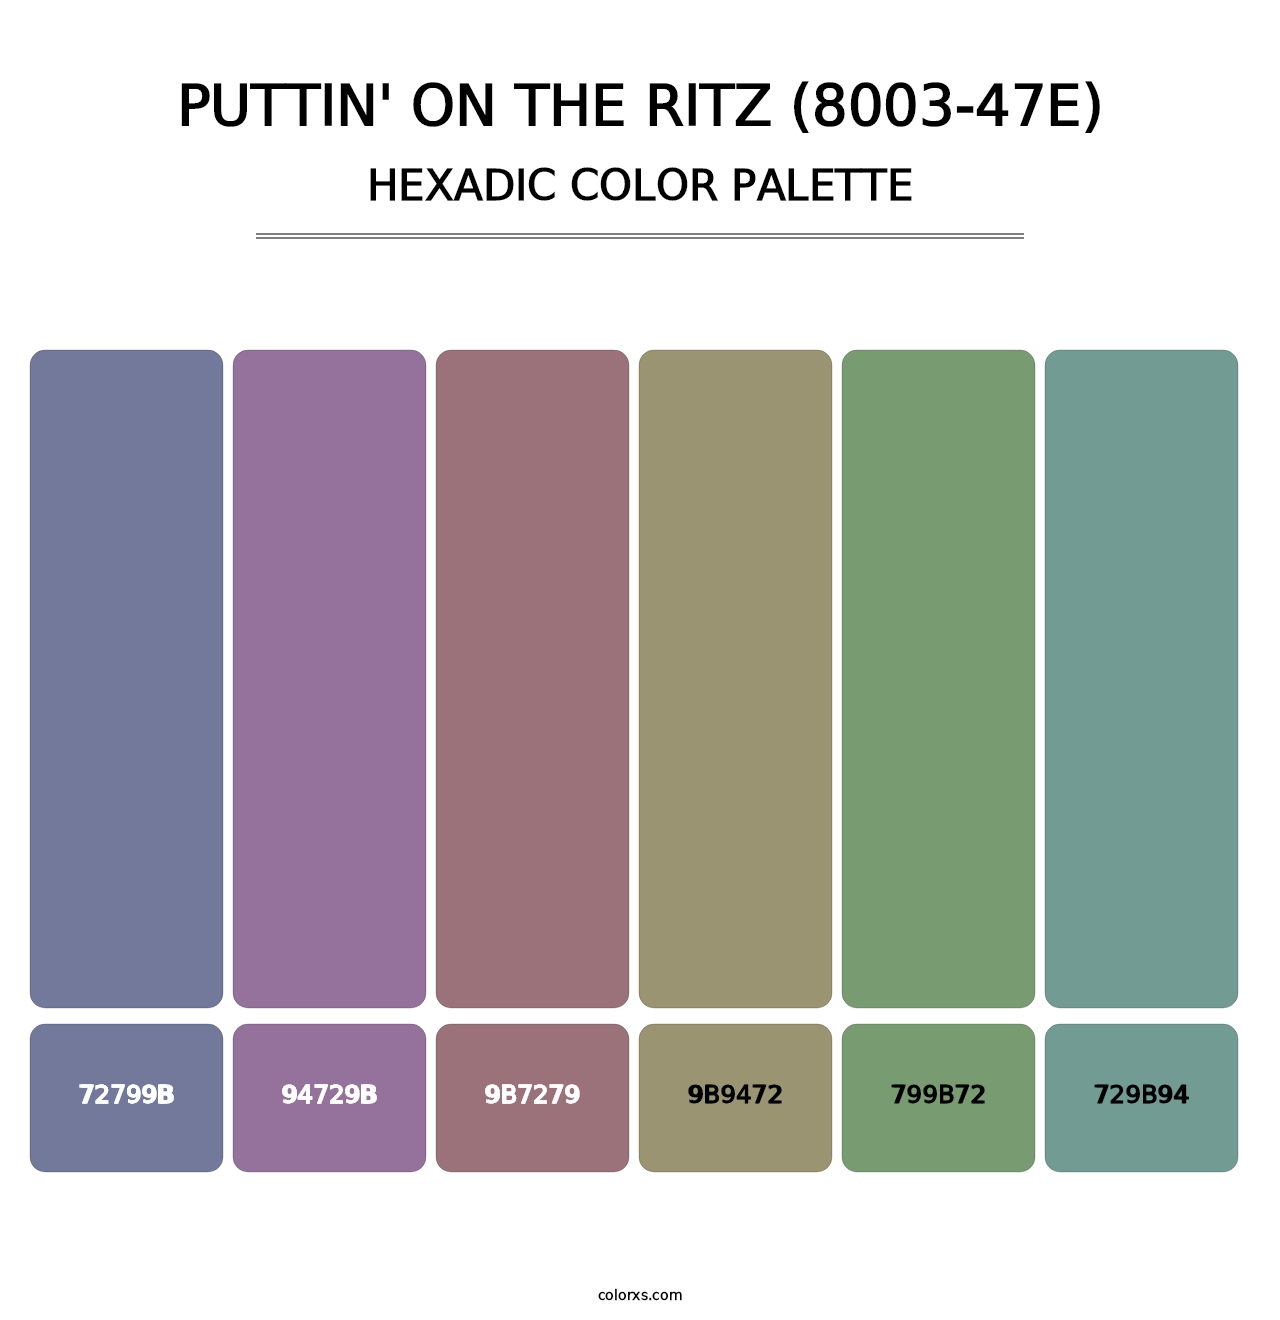 Puttin' on the Ritz (8003-47E) - Hexadic Color Palette